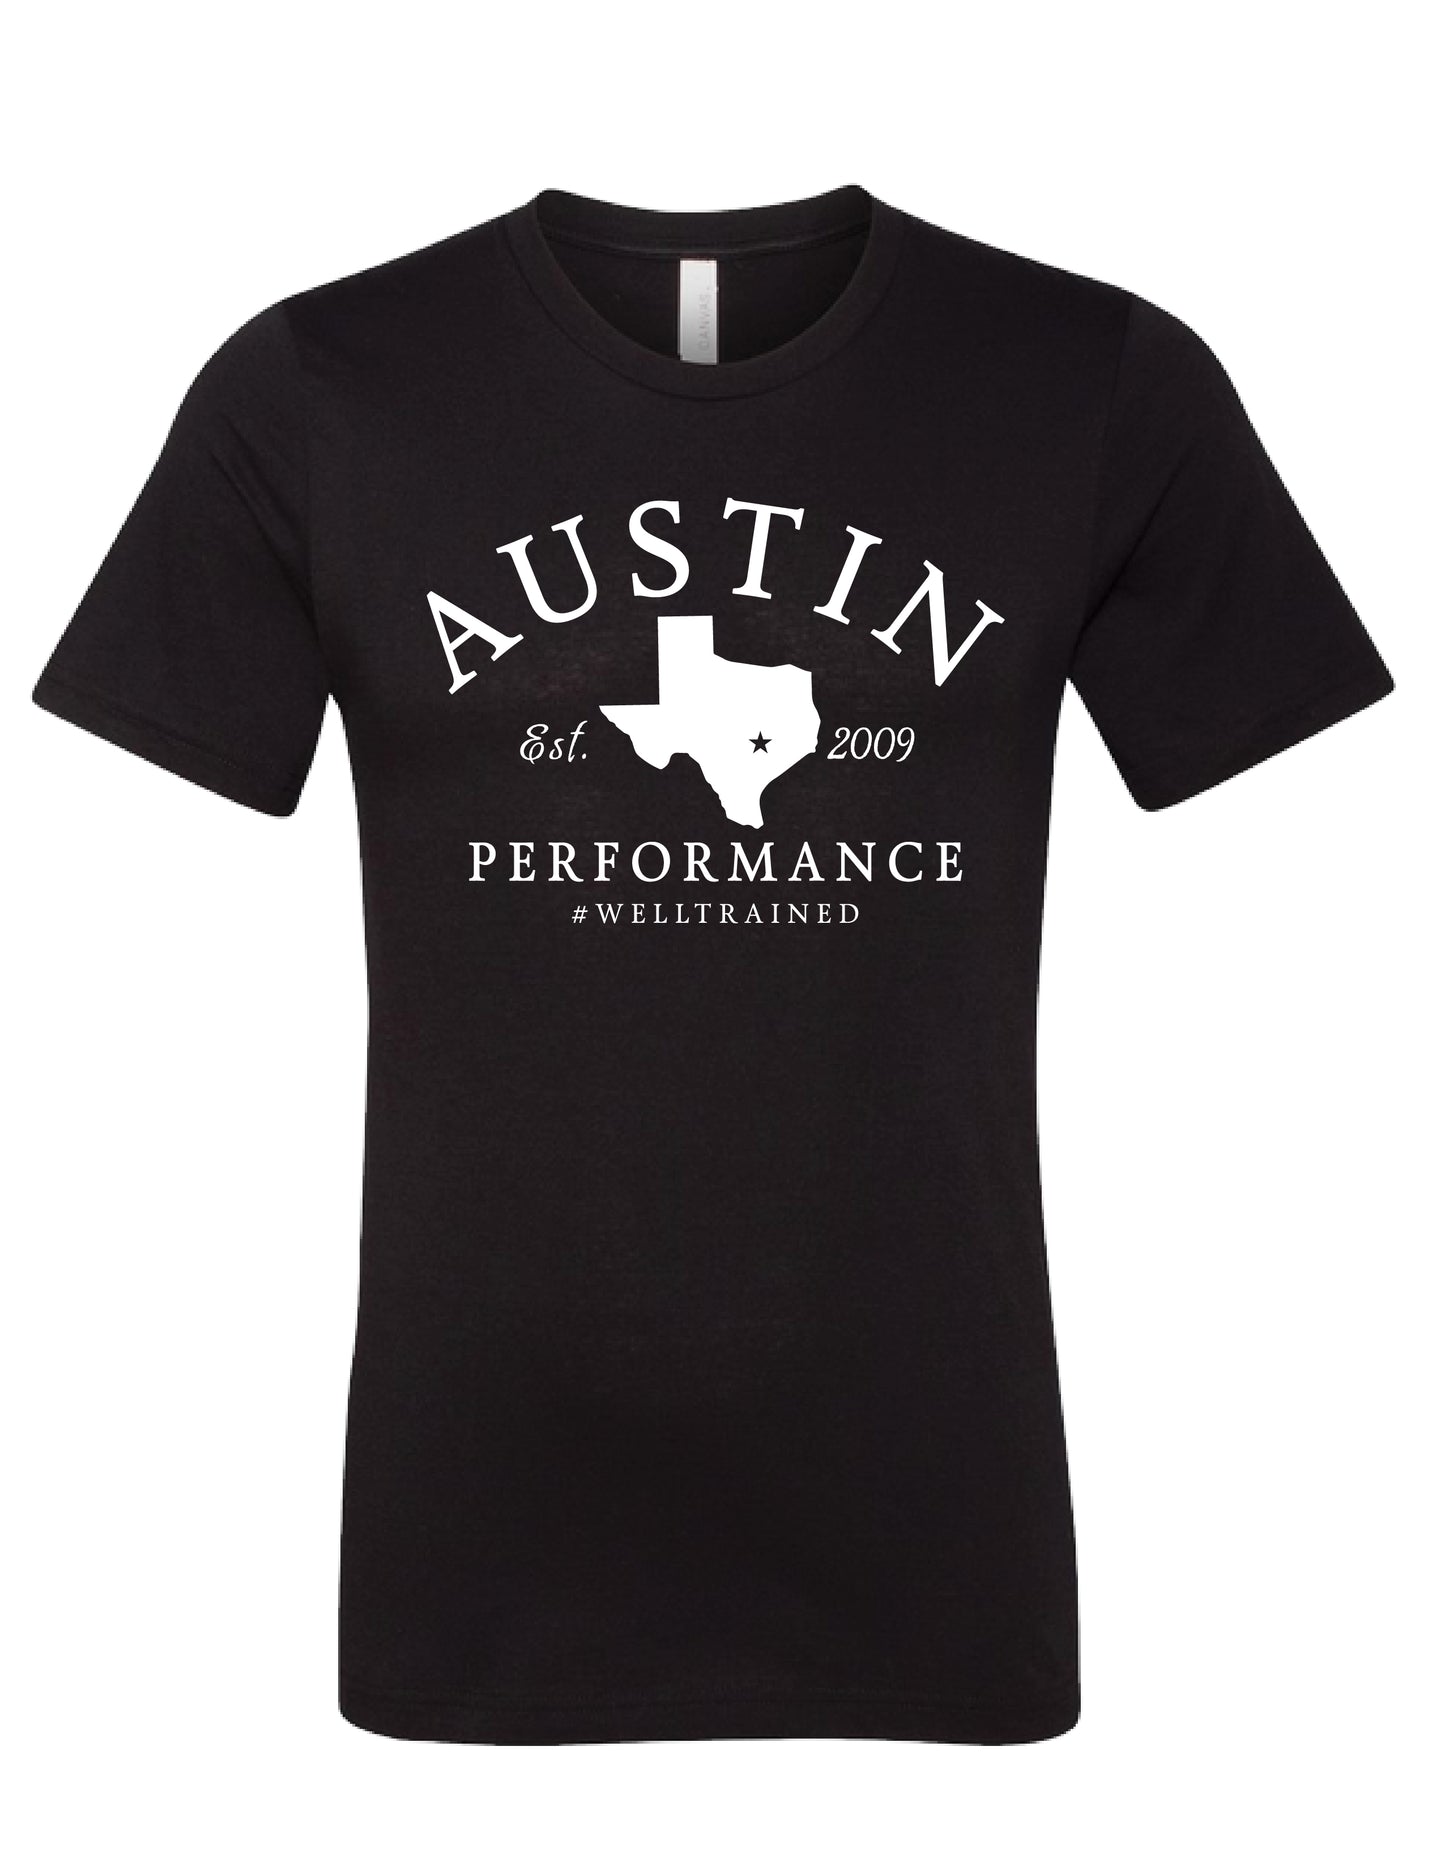 Austin Performance #Welltrained T - Black (WO-176073)